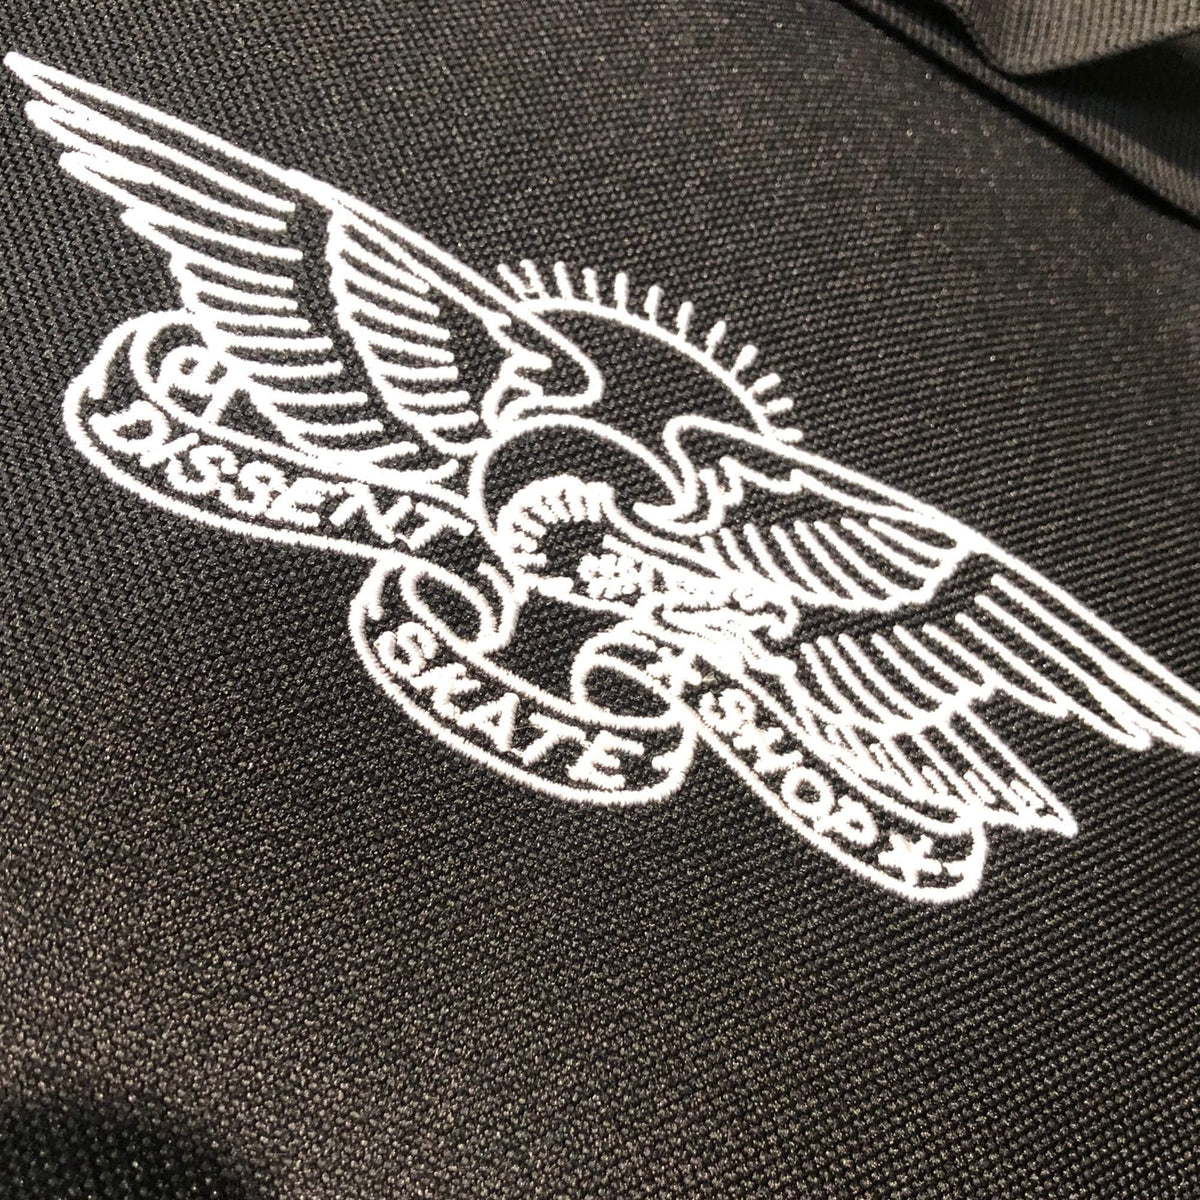 Dissent Skateboarding Eagle Logo Traveller Bag Black